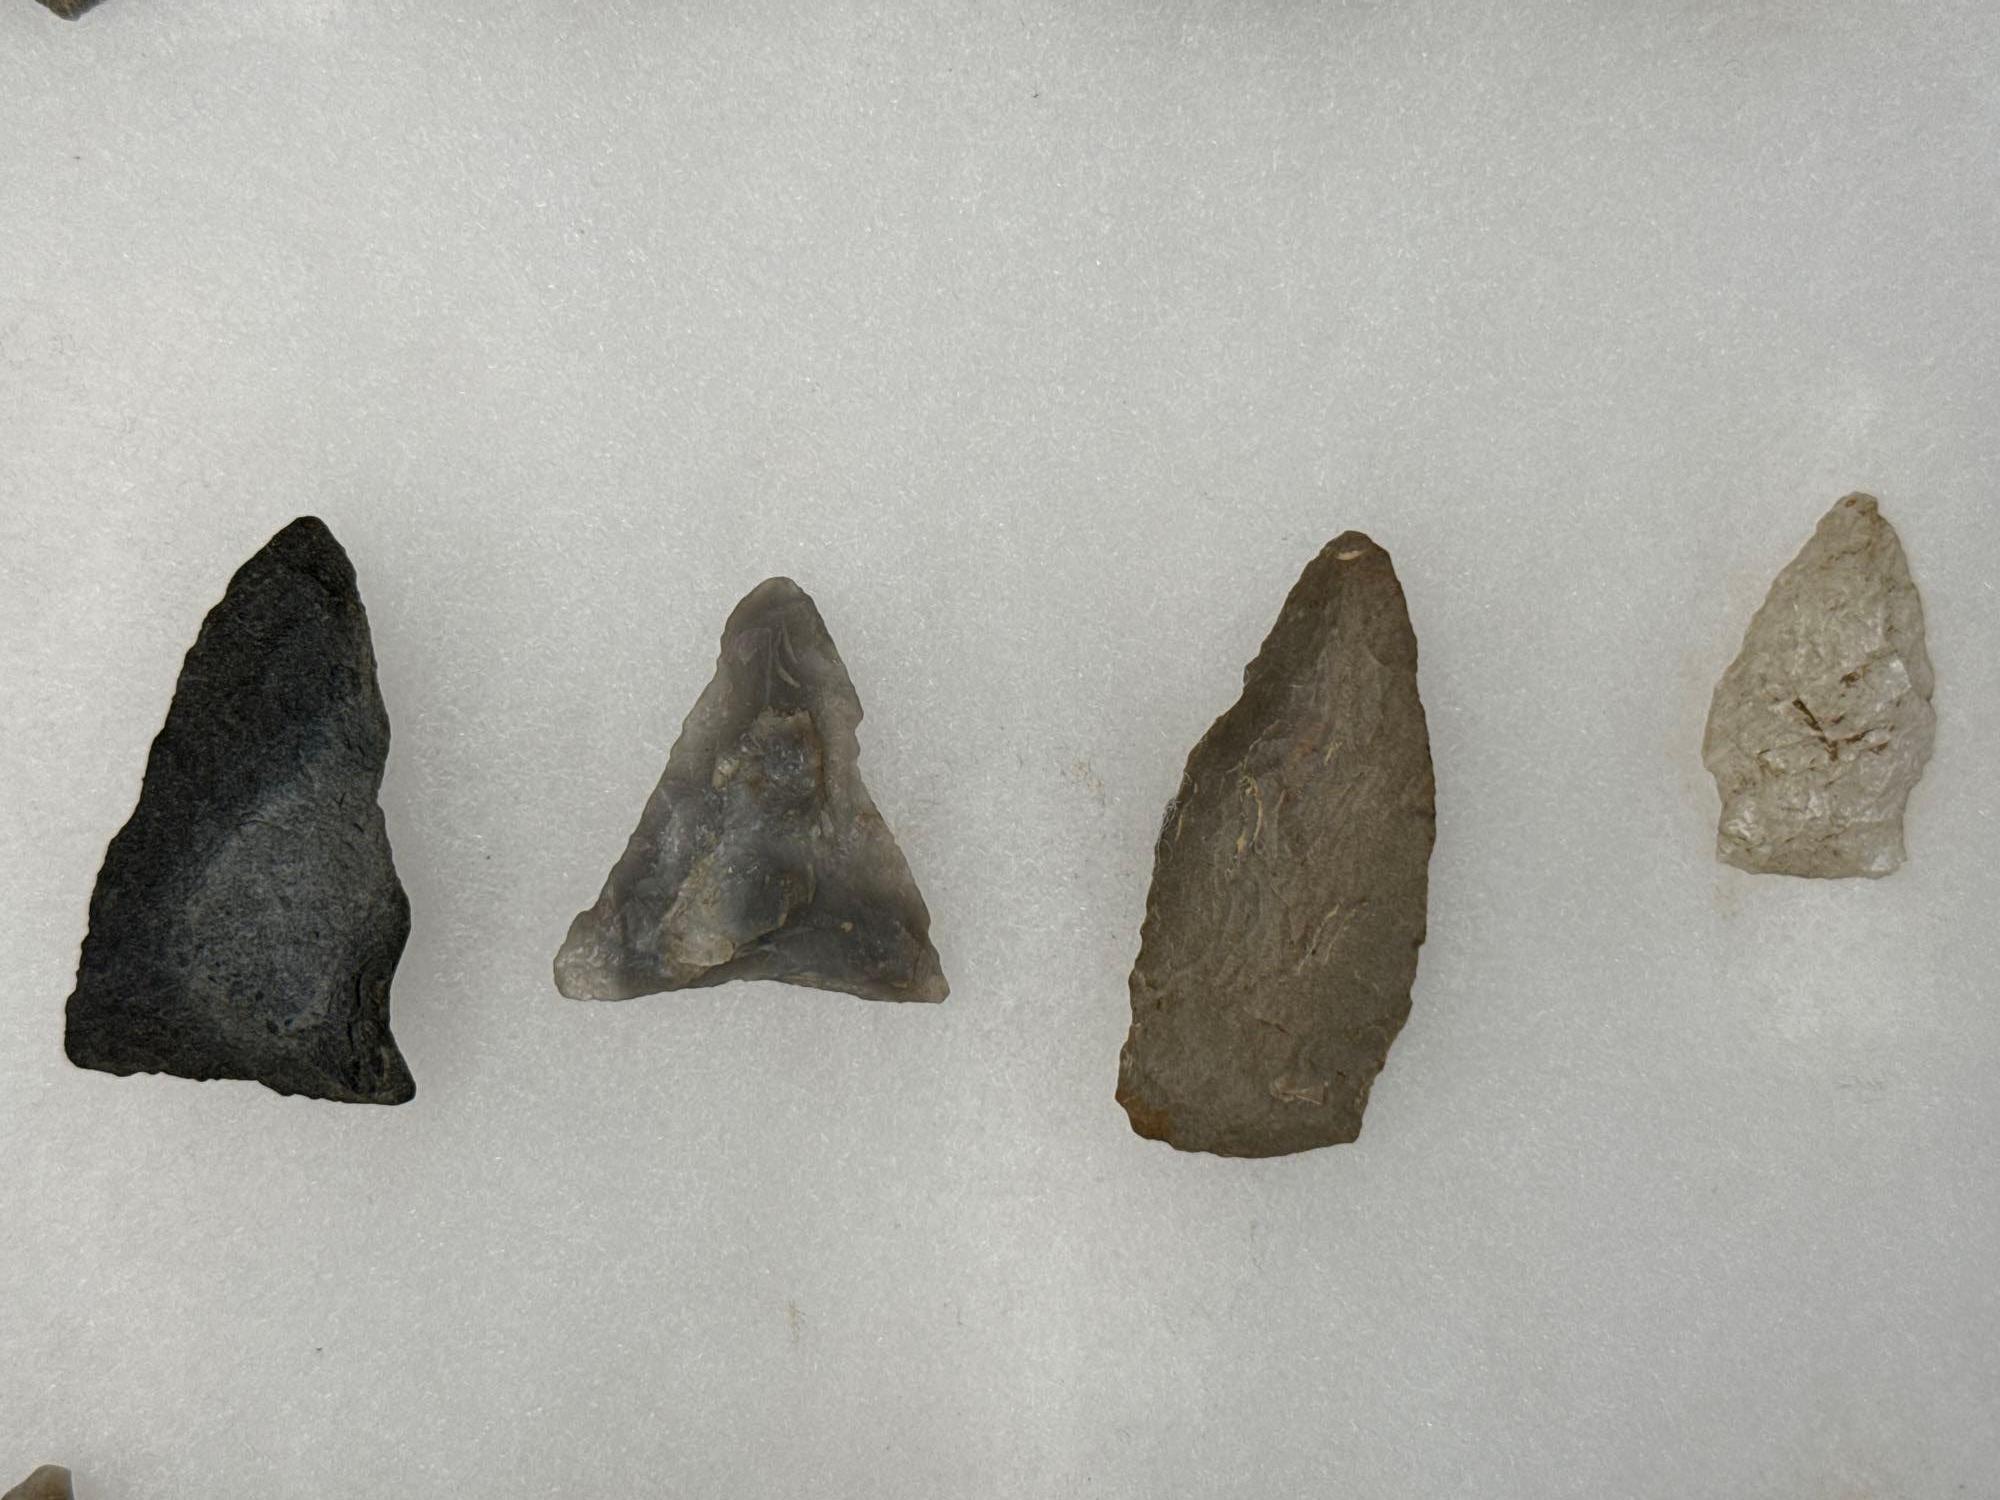 16 Nice Points, Jasper, Chalcedony, Chert, Quartzite, Found in Berks Co., PA, Ex: Kauffman Collectio